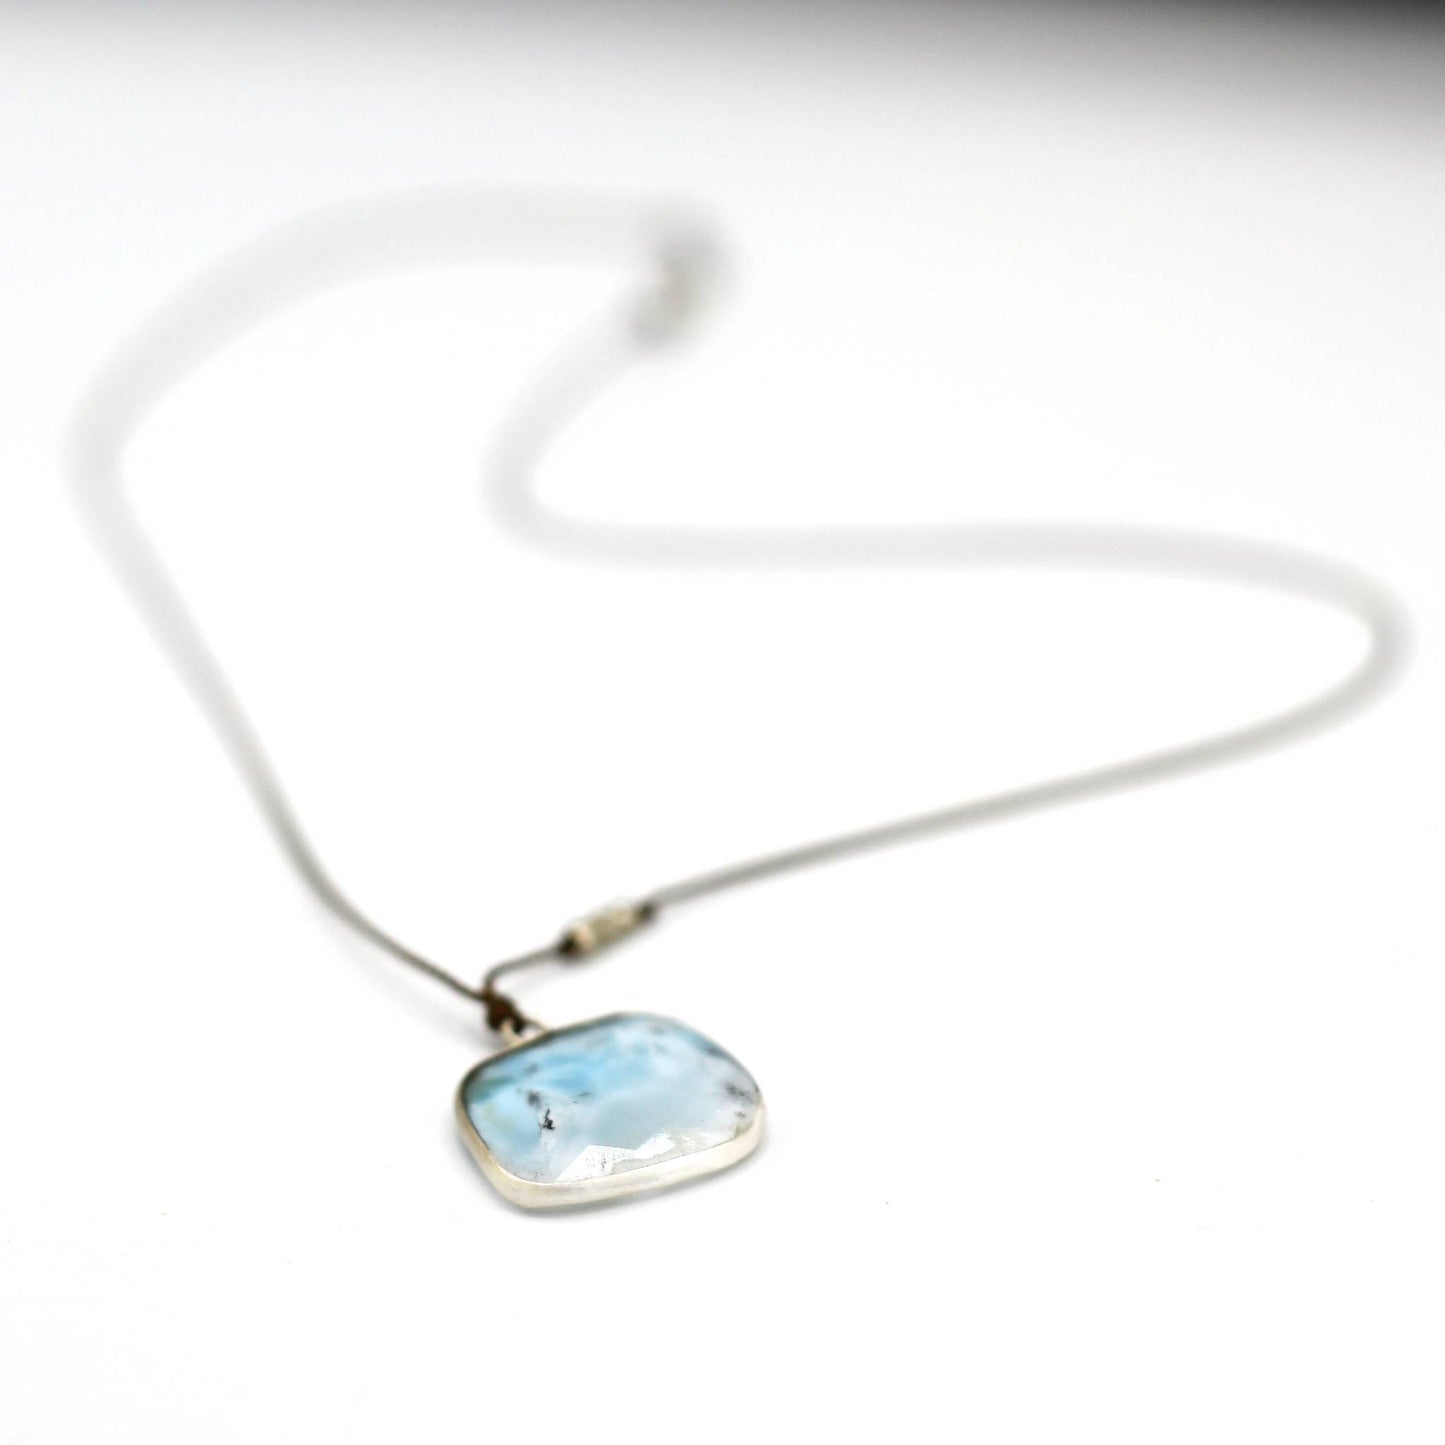 Margaret Solow Jewelry | Larimar + Sterling Silver Drop Necklace | Firecracker